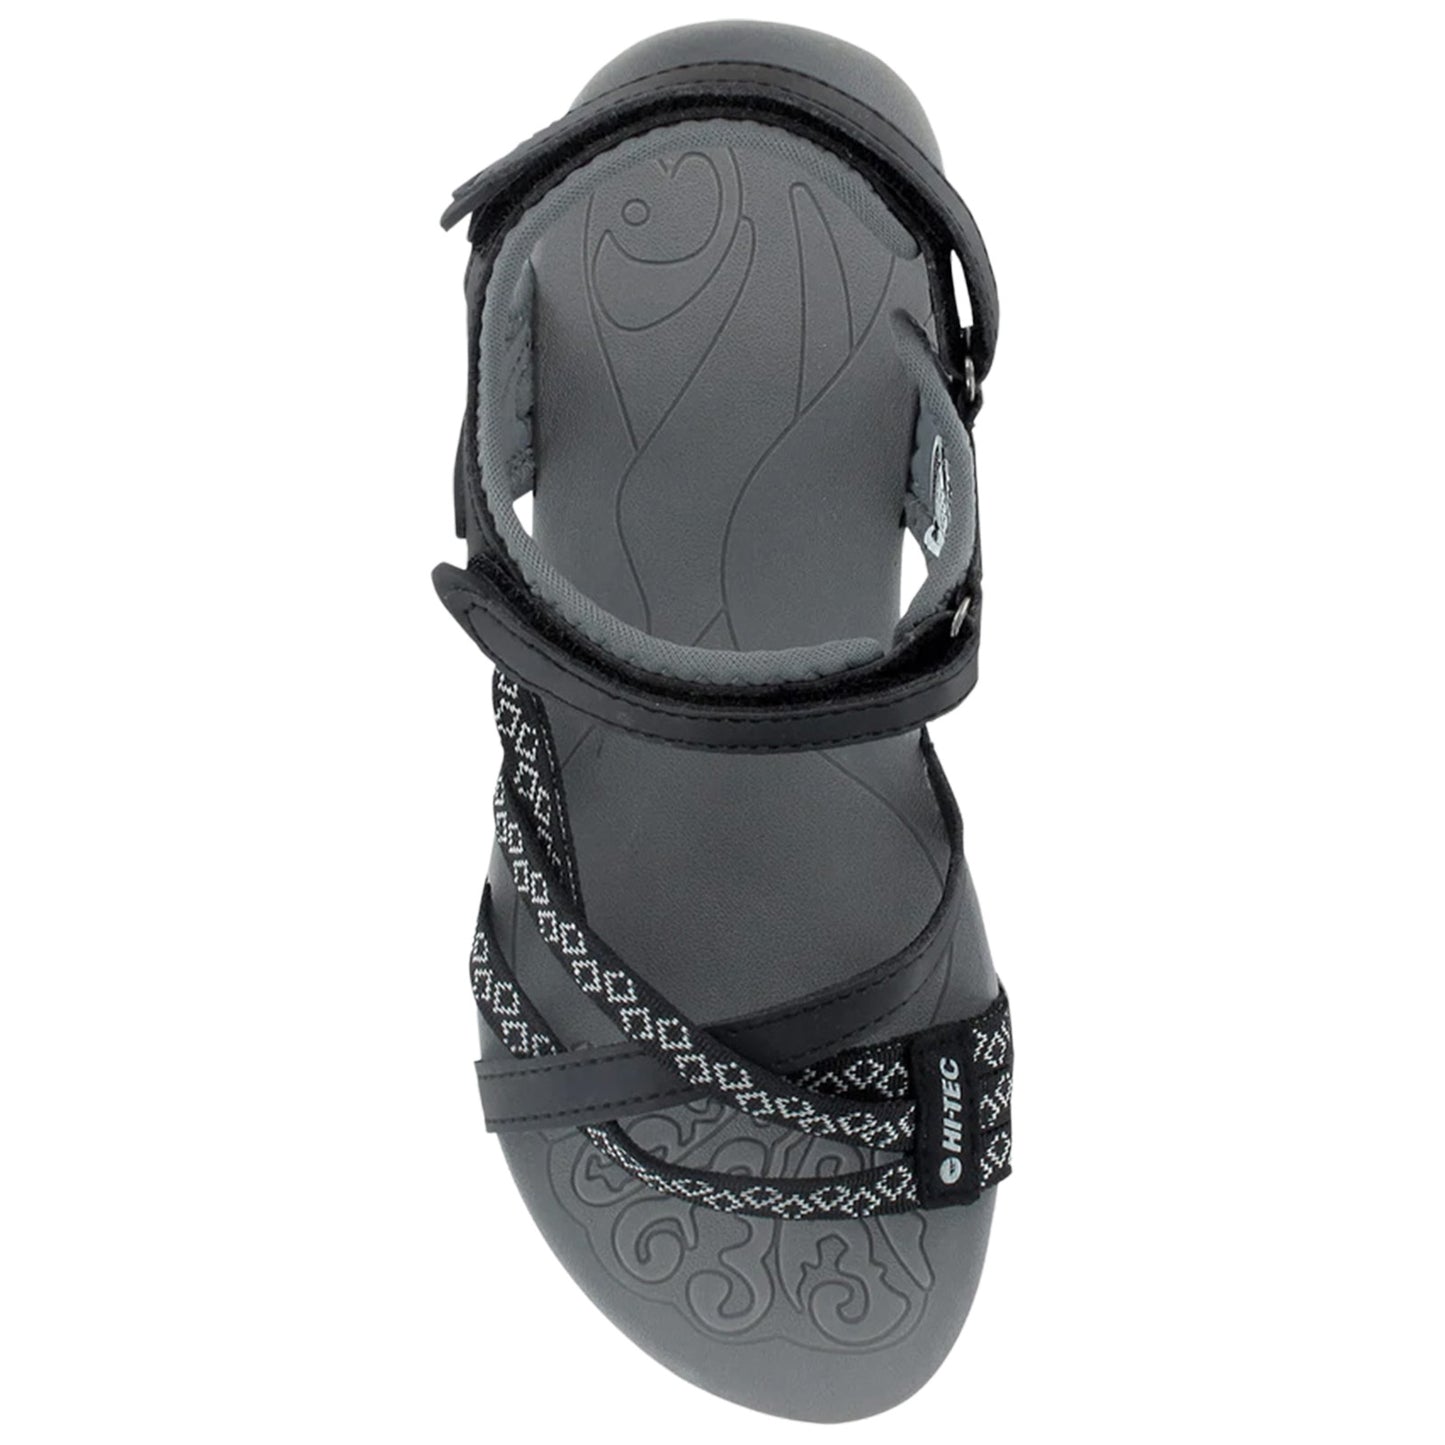 Walking Sports Ladies More Hi-Tec Savanna Sandals – II